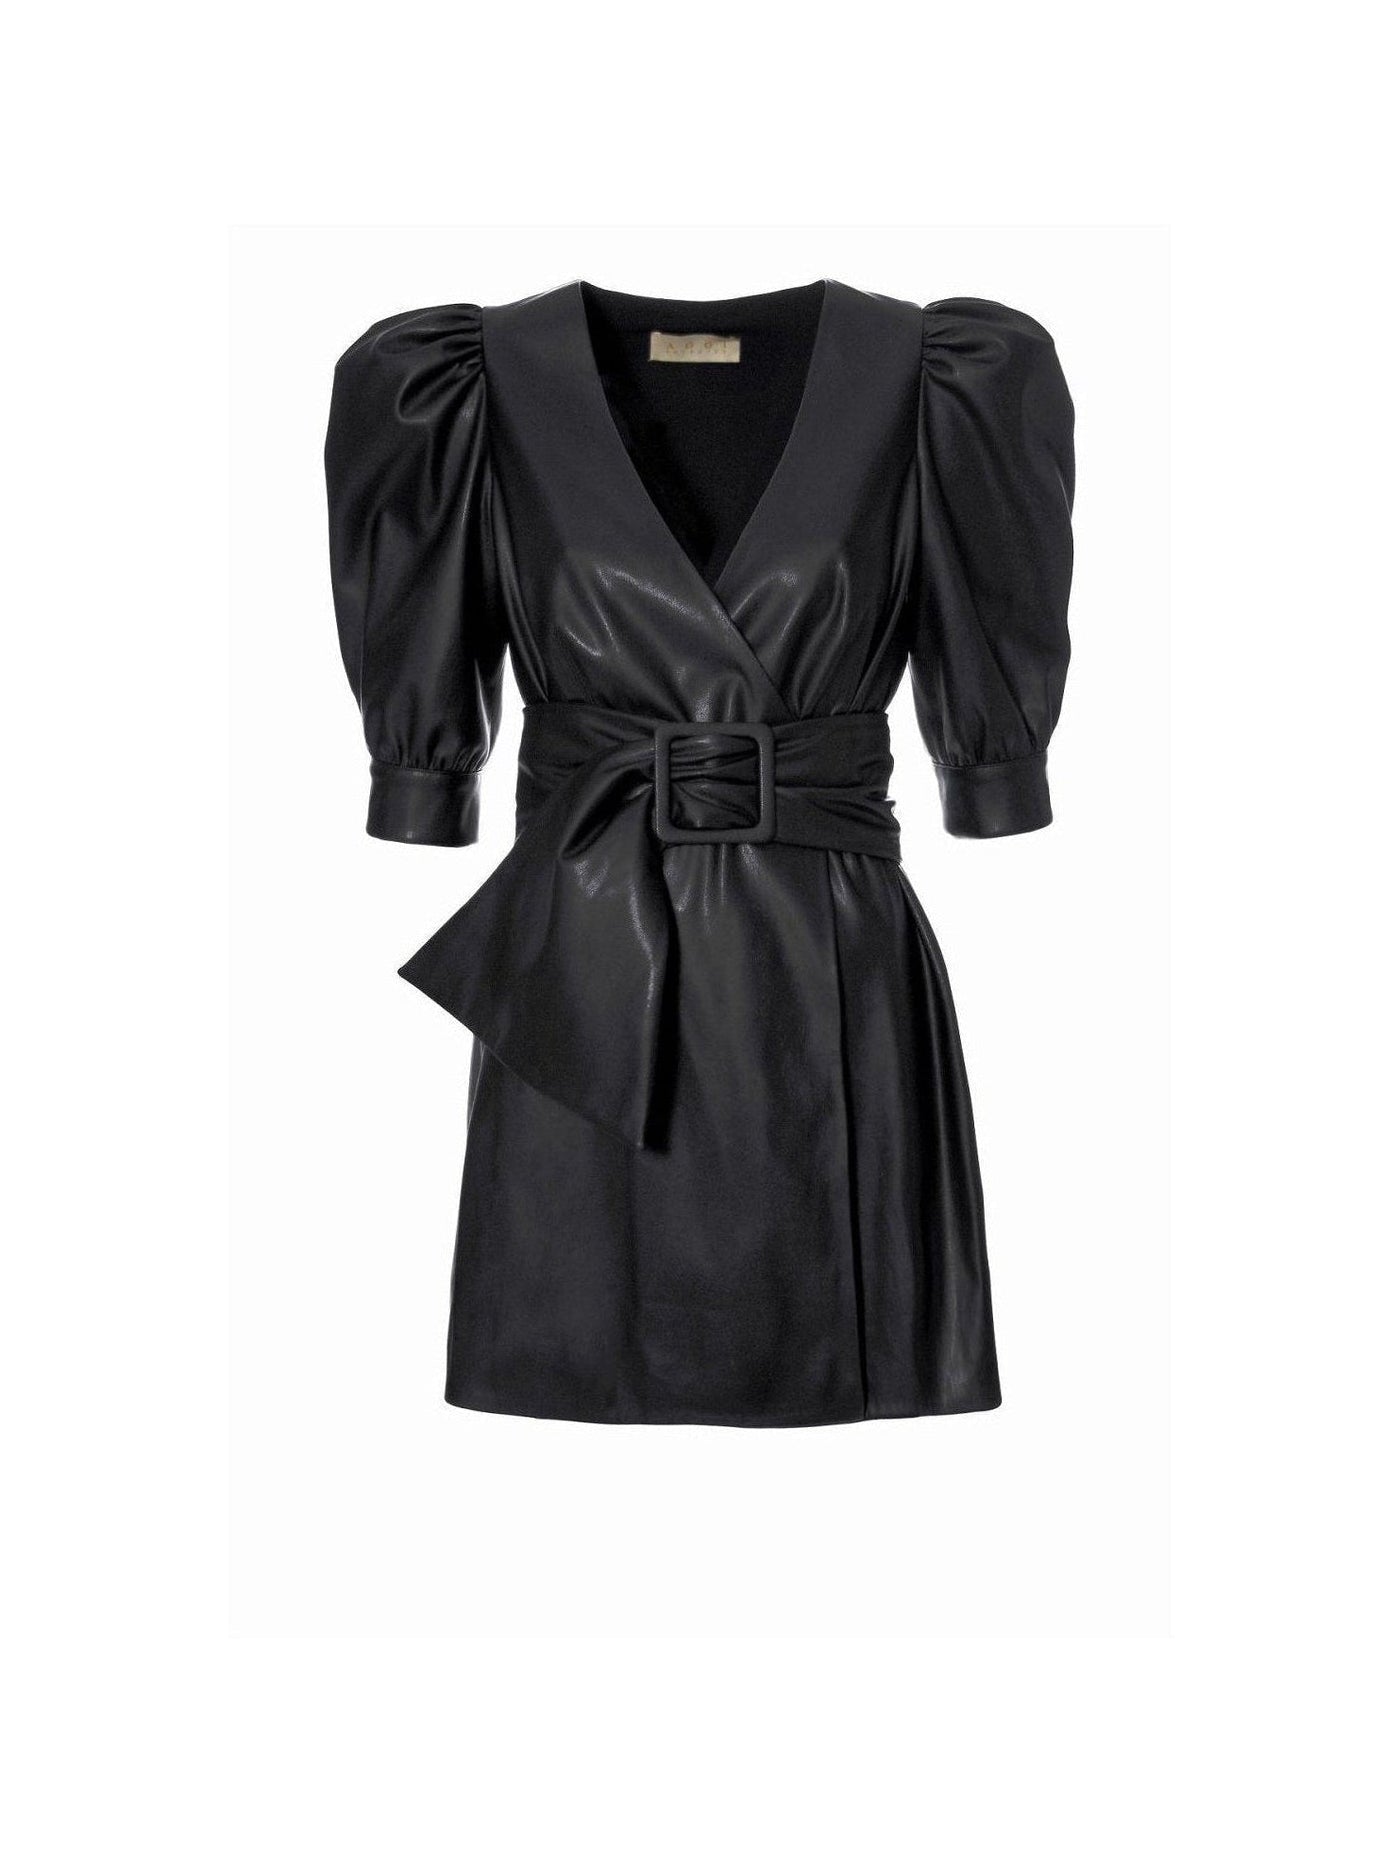 Andrea Cynical Black Dress